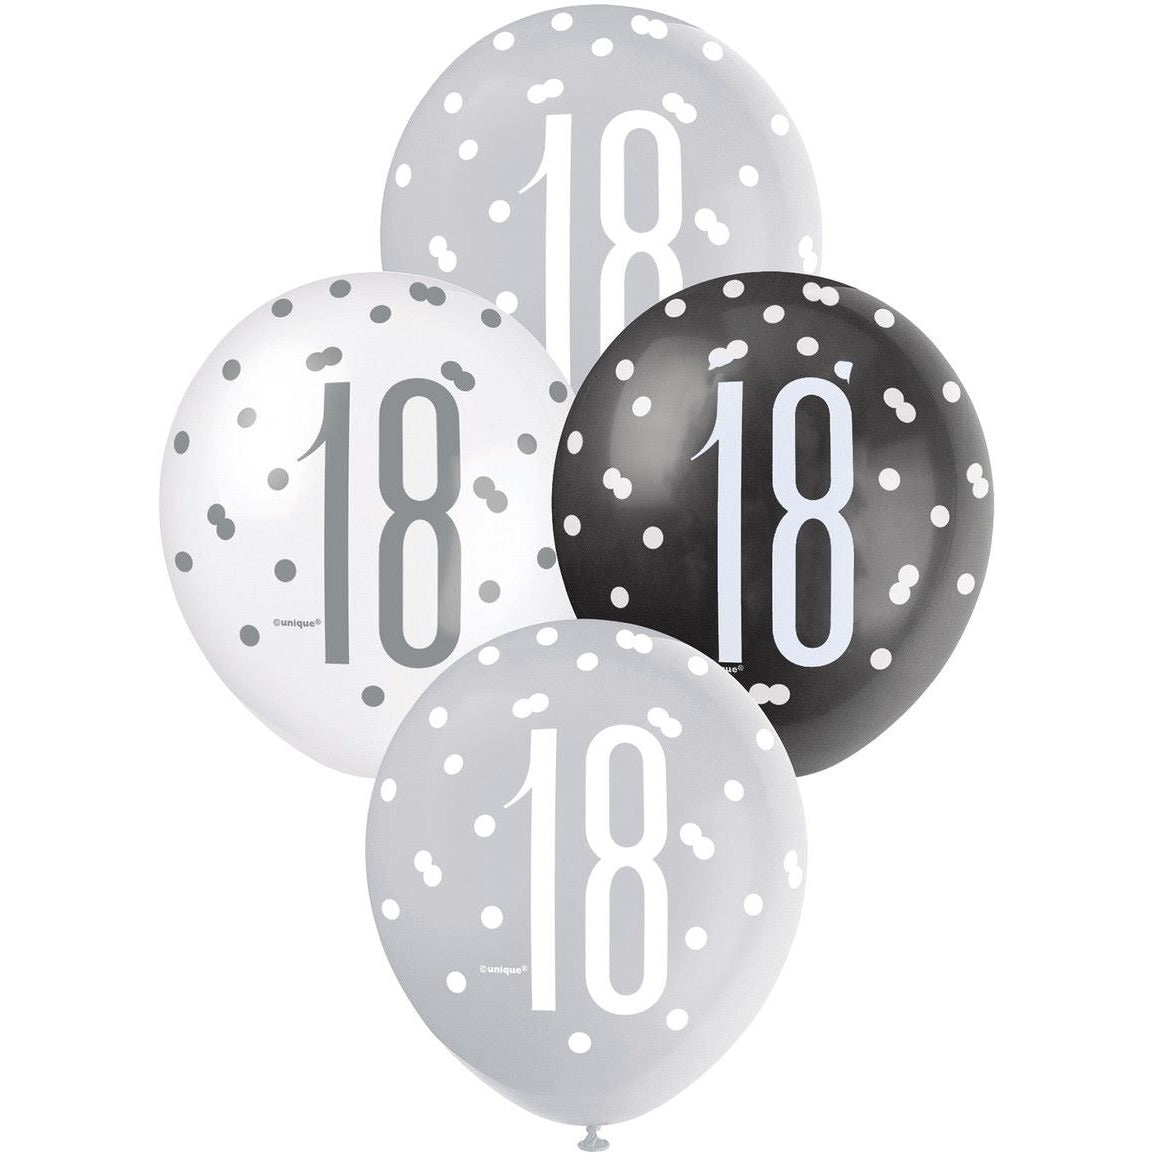 Black, Silver & White 18th Birthday Latex Balloons - Dollars and Sense